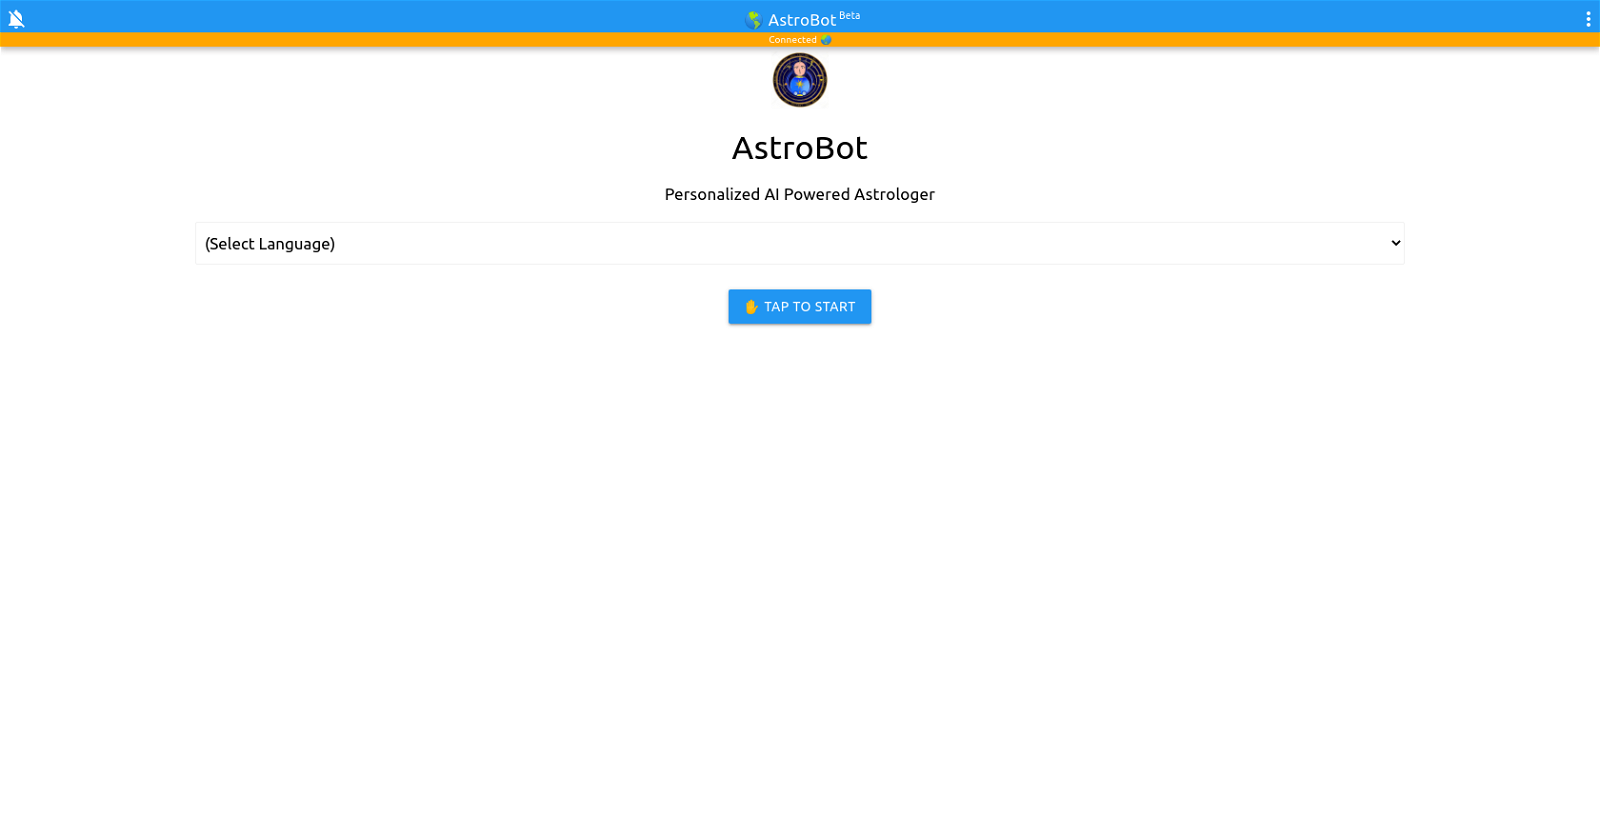 AstroBot